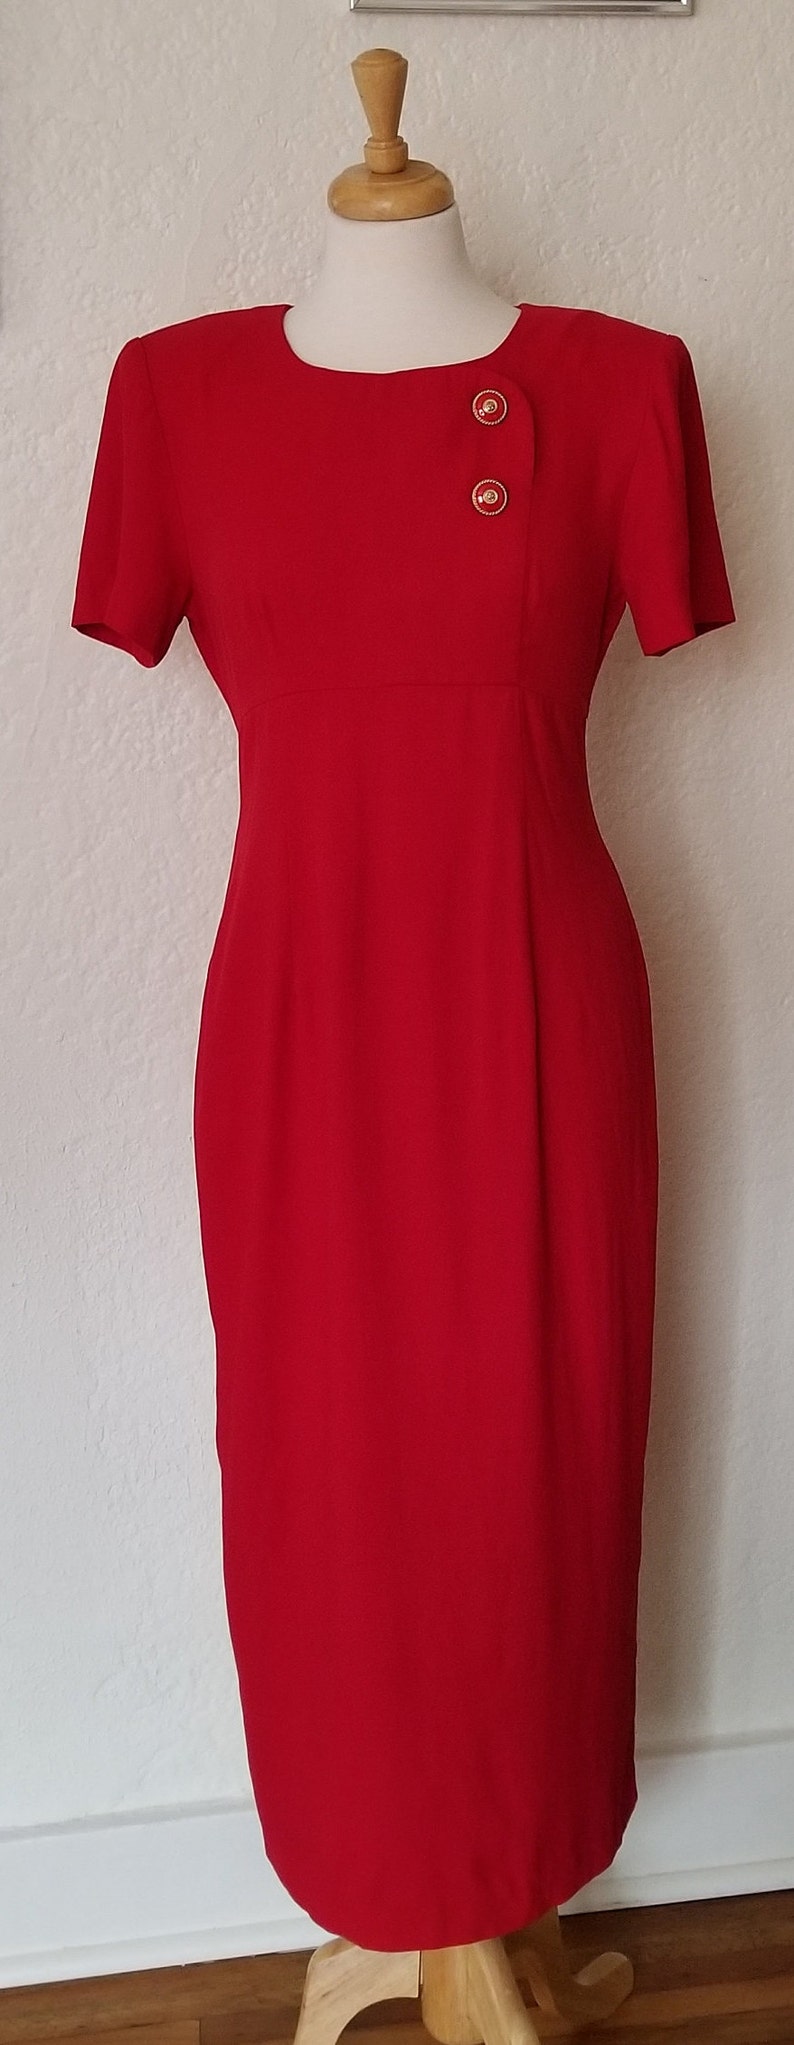 Vintage 1980s-1990s John Roberts red short-sleeved midi sheath dress image 3